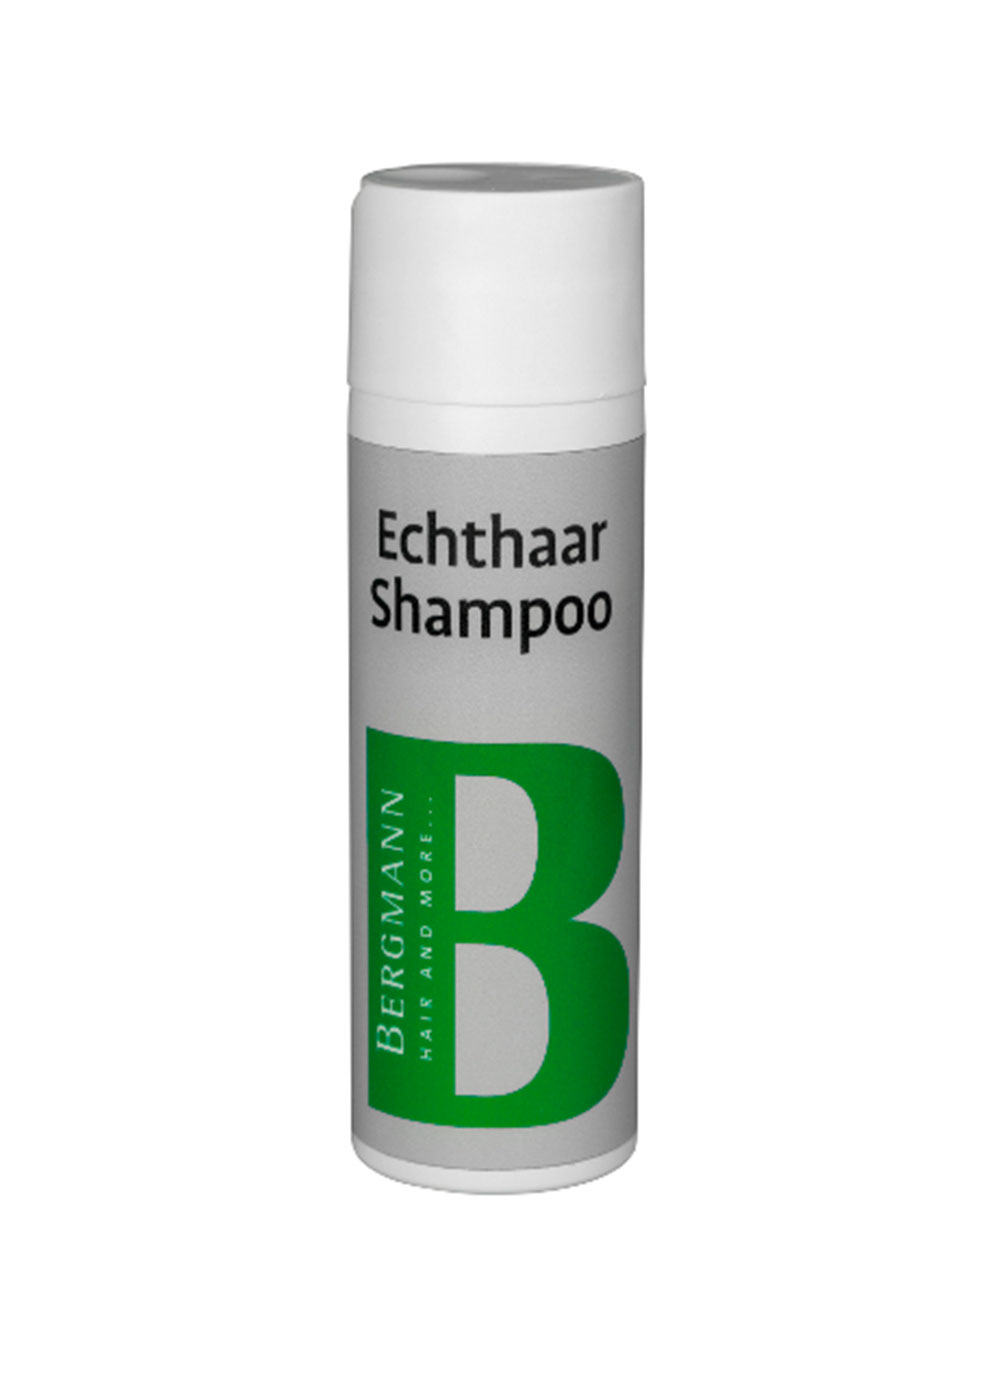 Bergmann Zubehör - Echthaar Shampoo 200ml